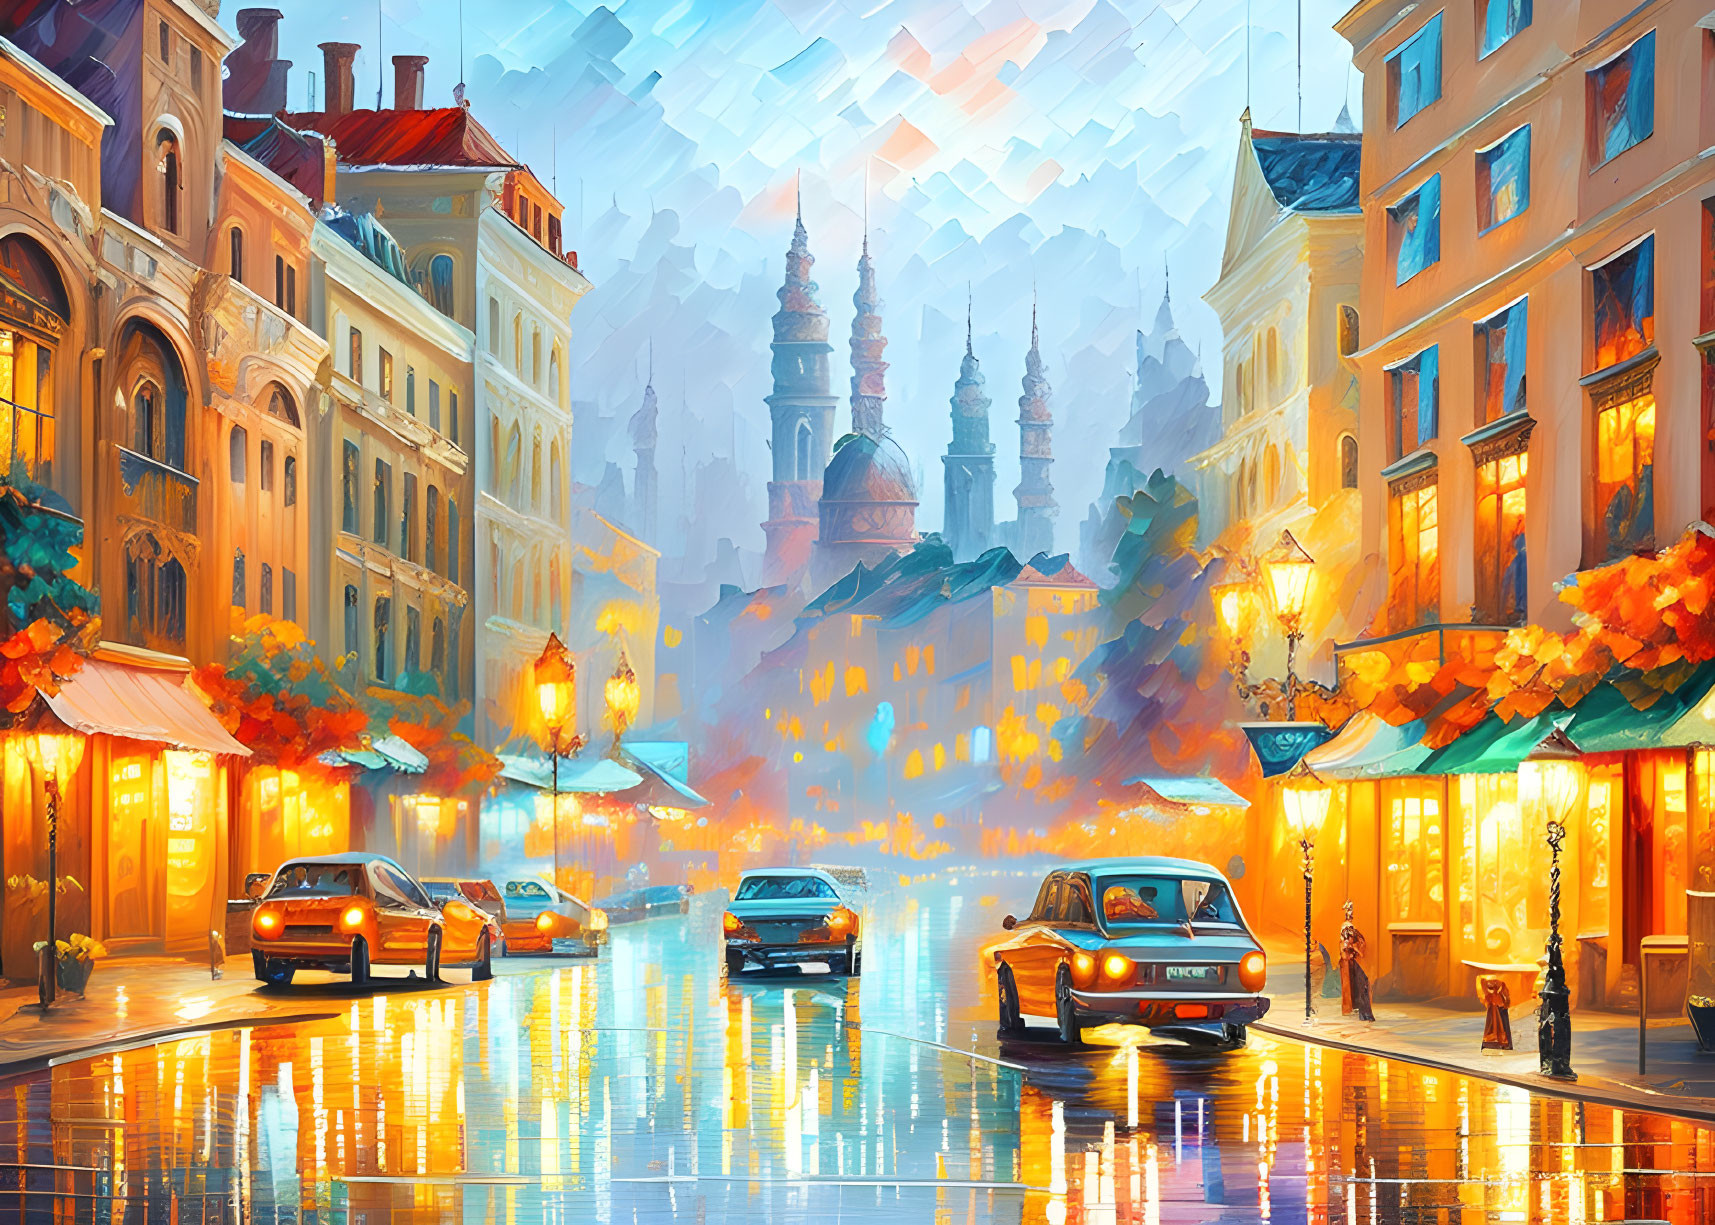 Twilight street scene with rain-soaked ambiance